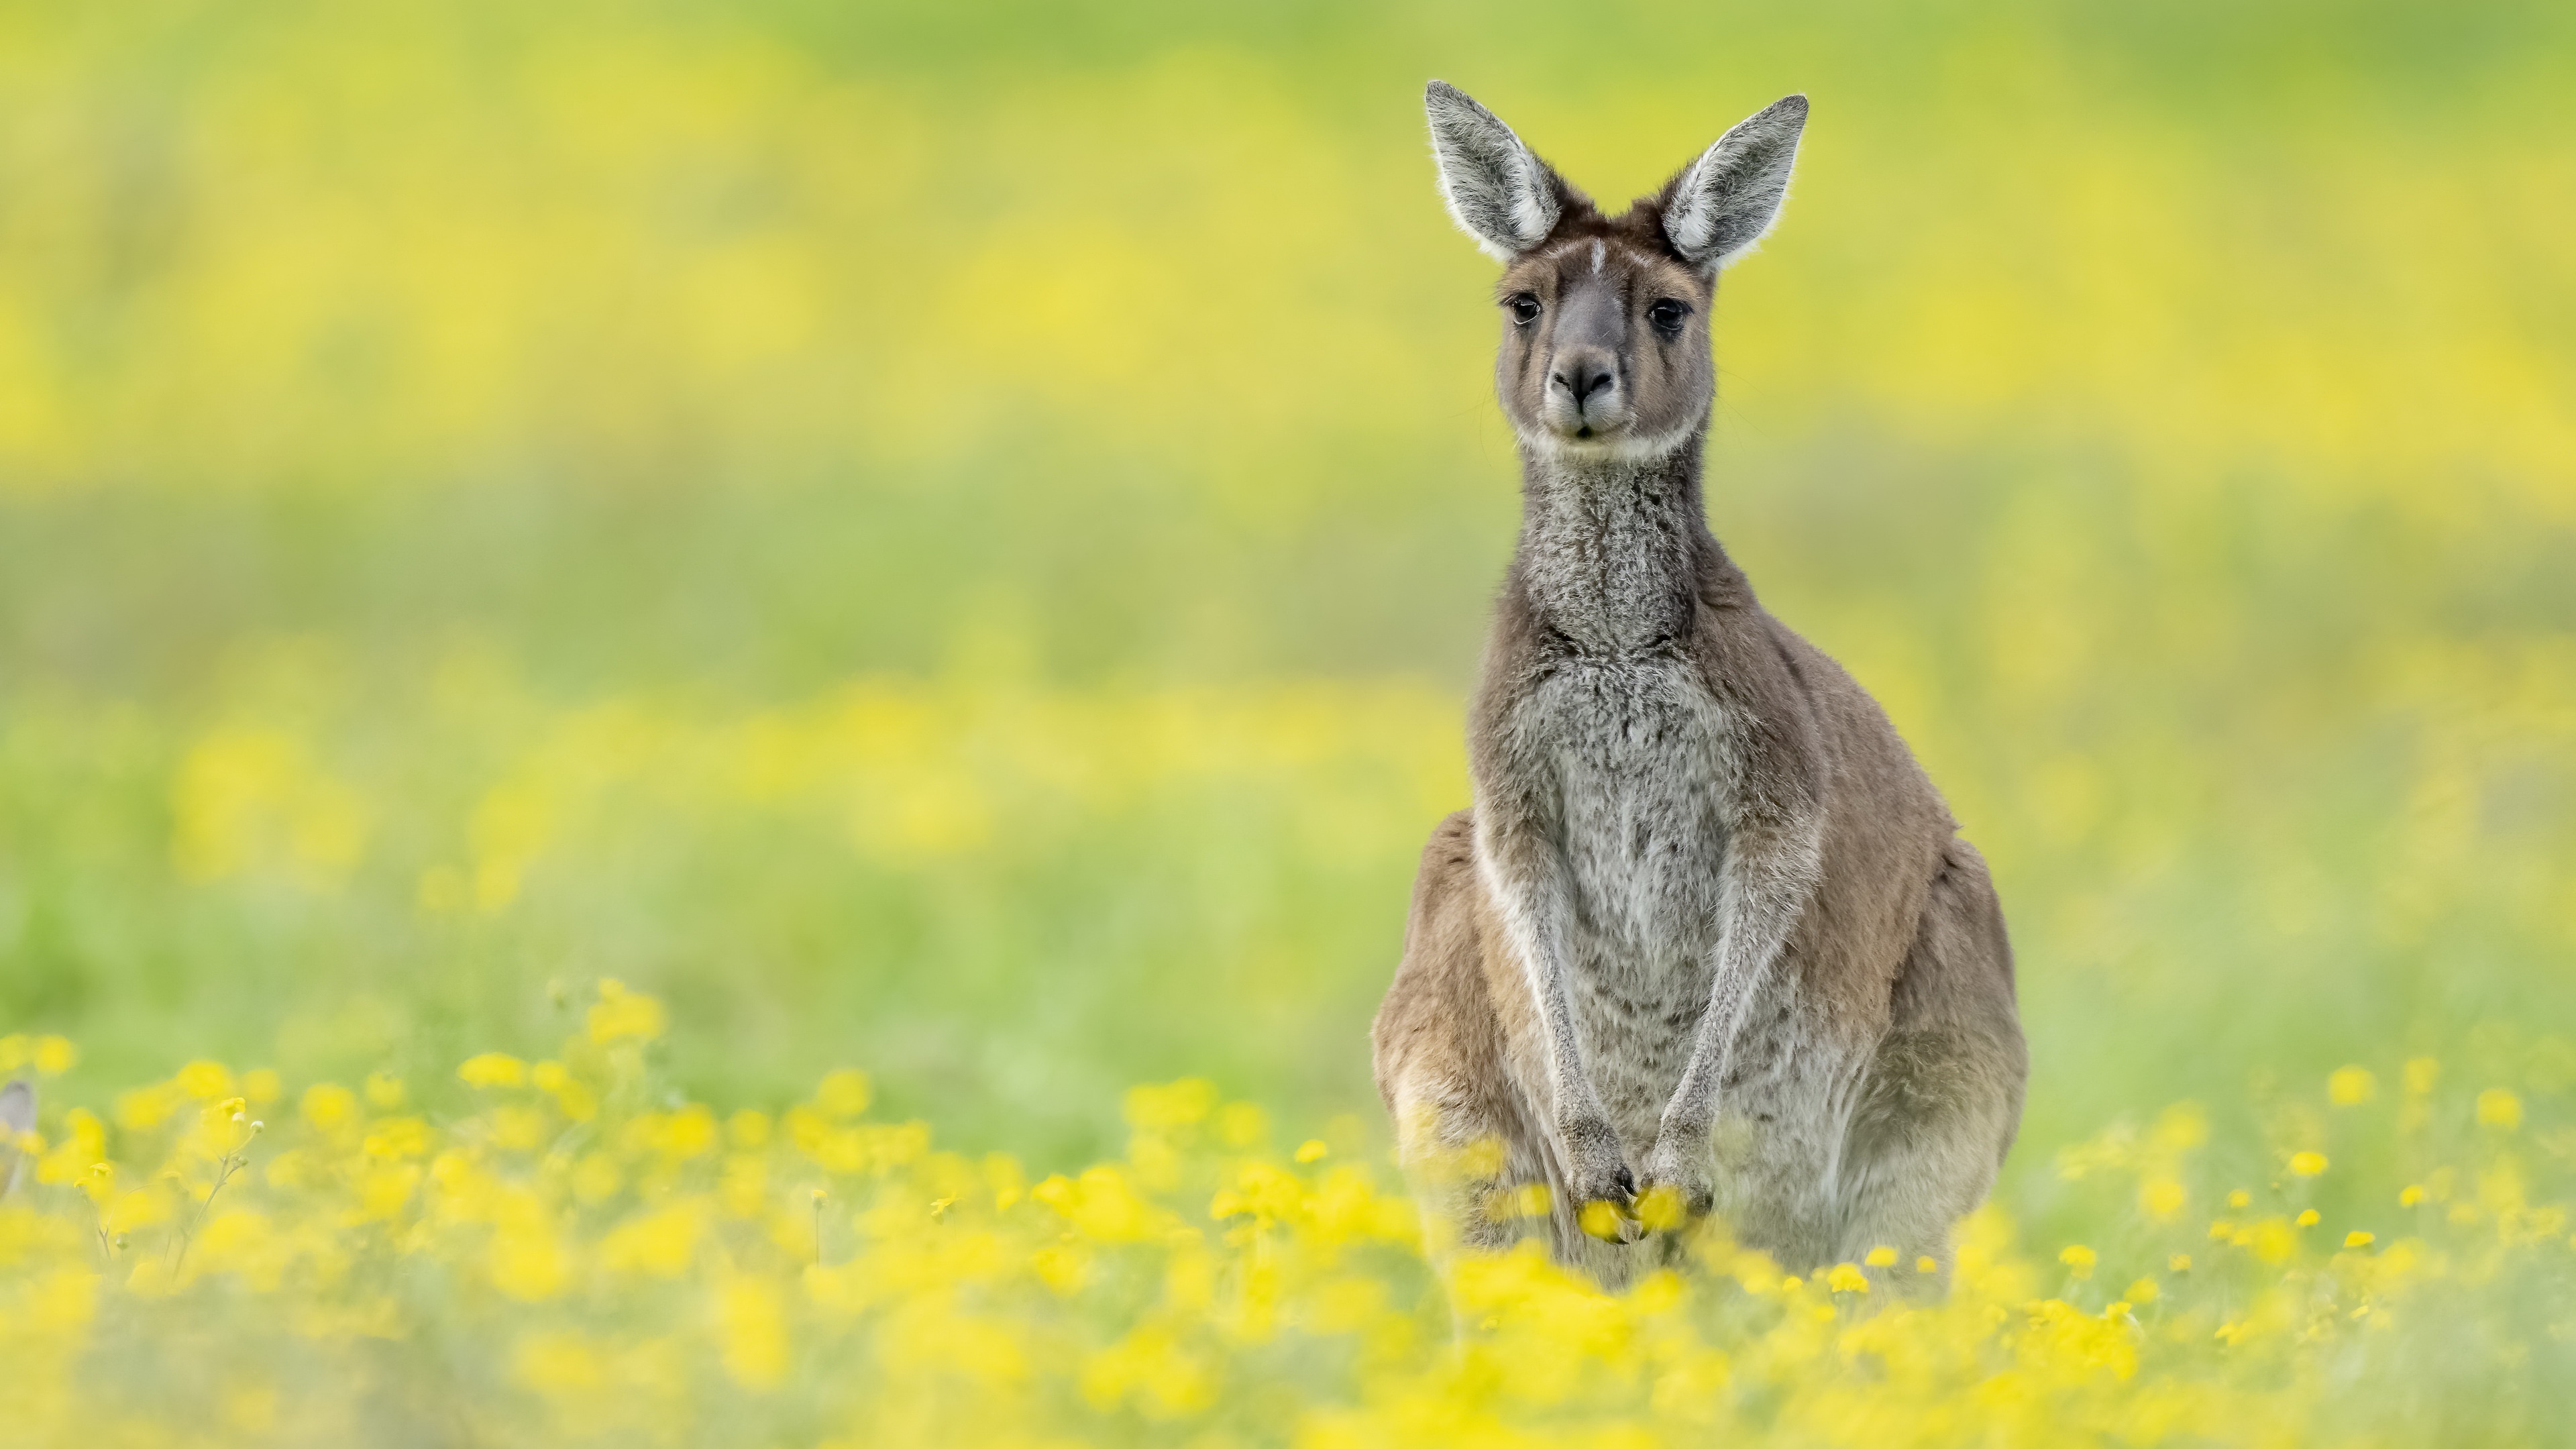 Desktop Wallpaper Kangaroo Animal Landscape Hd Image Picture  Background Sab3j2